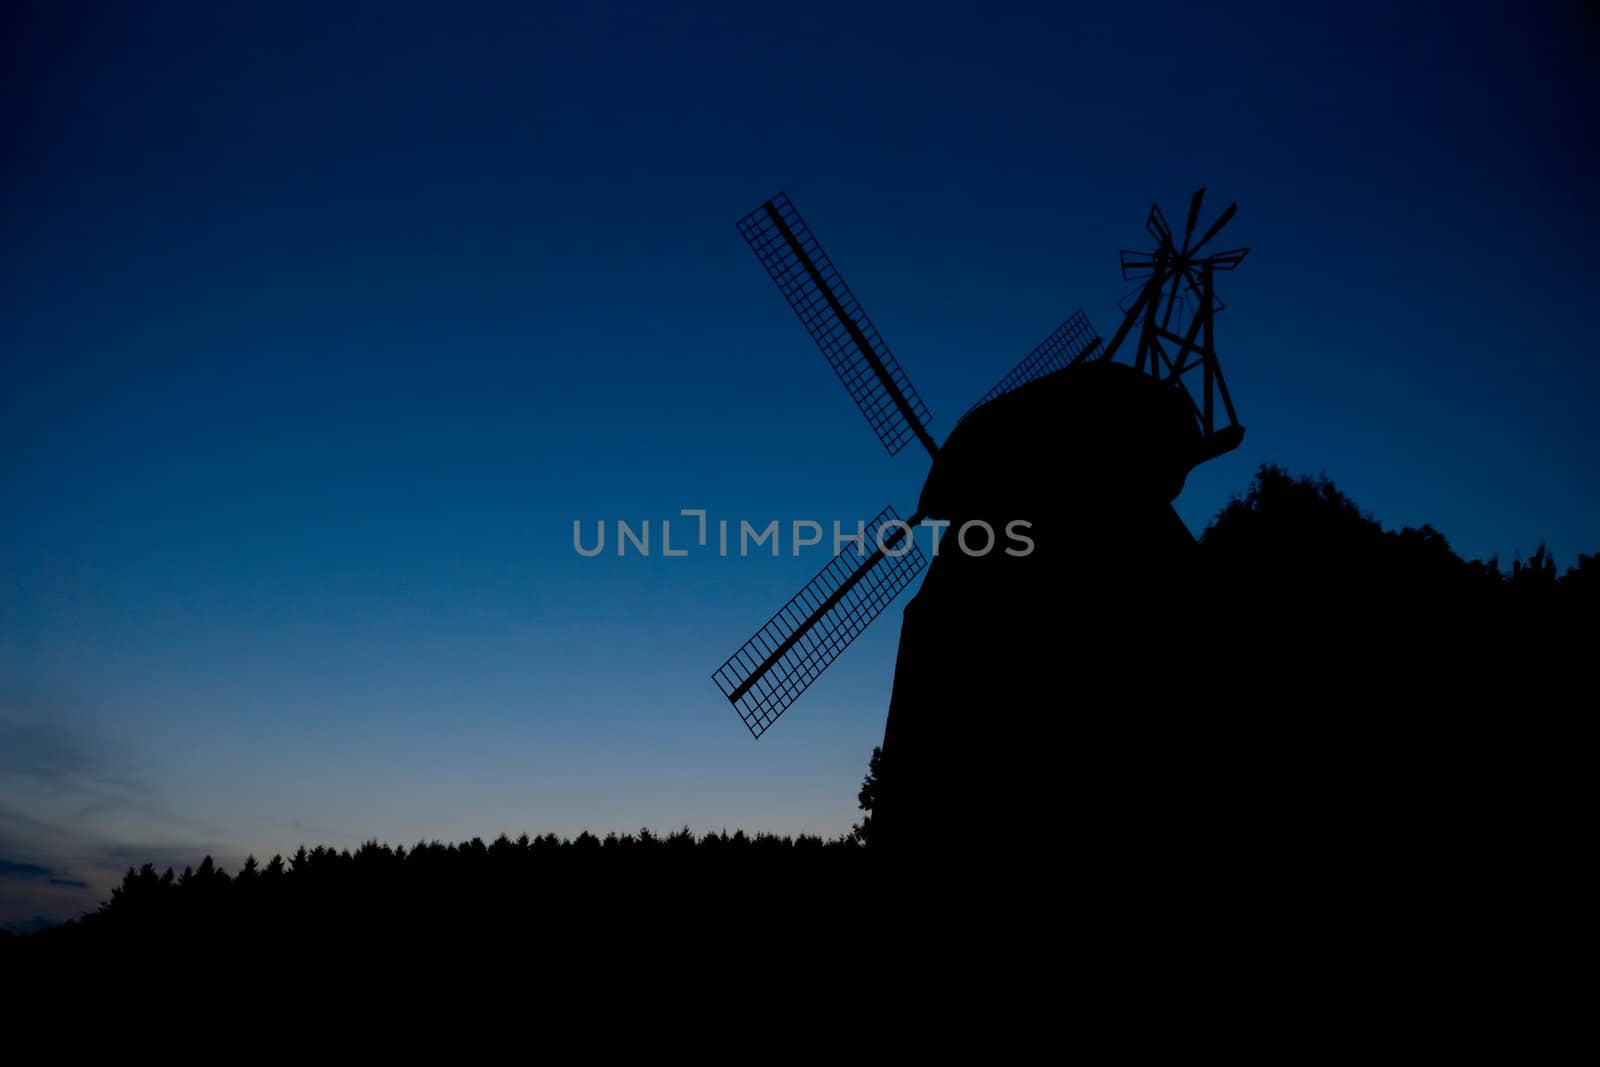 Windmill at dusk by y_serge